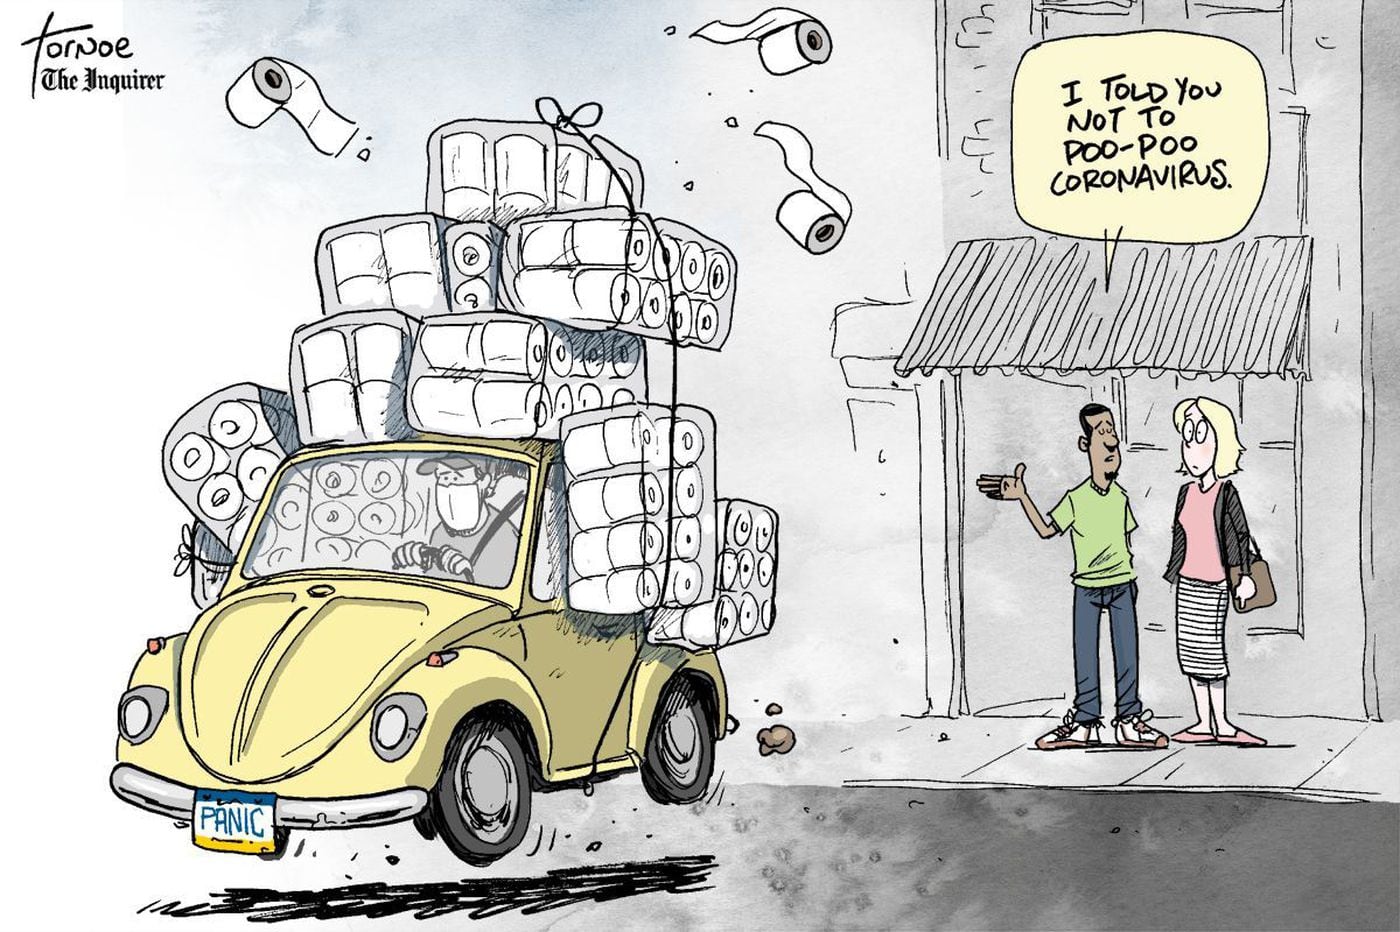 Despite coronavirus panic, there's plenty of toilet paper | Cartoon